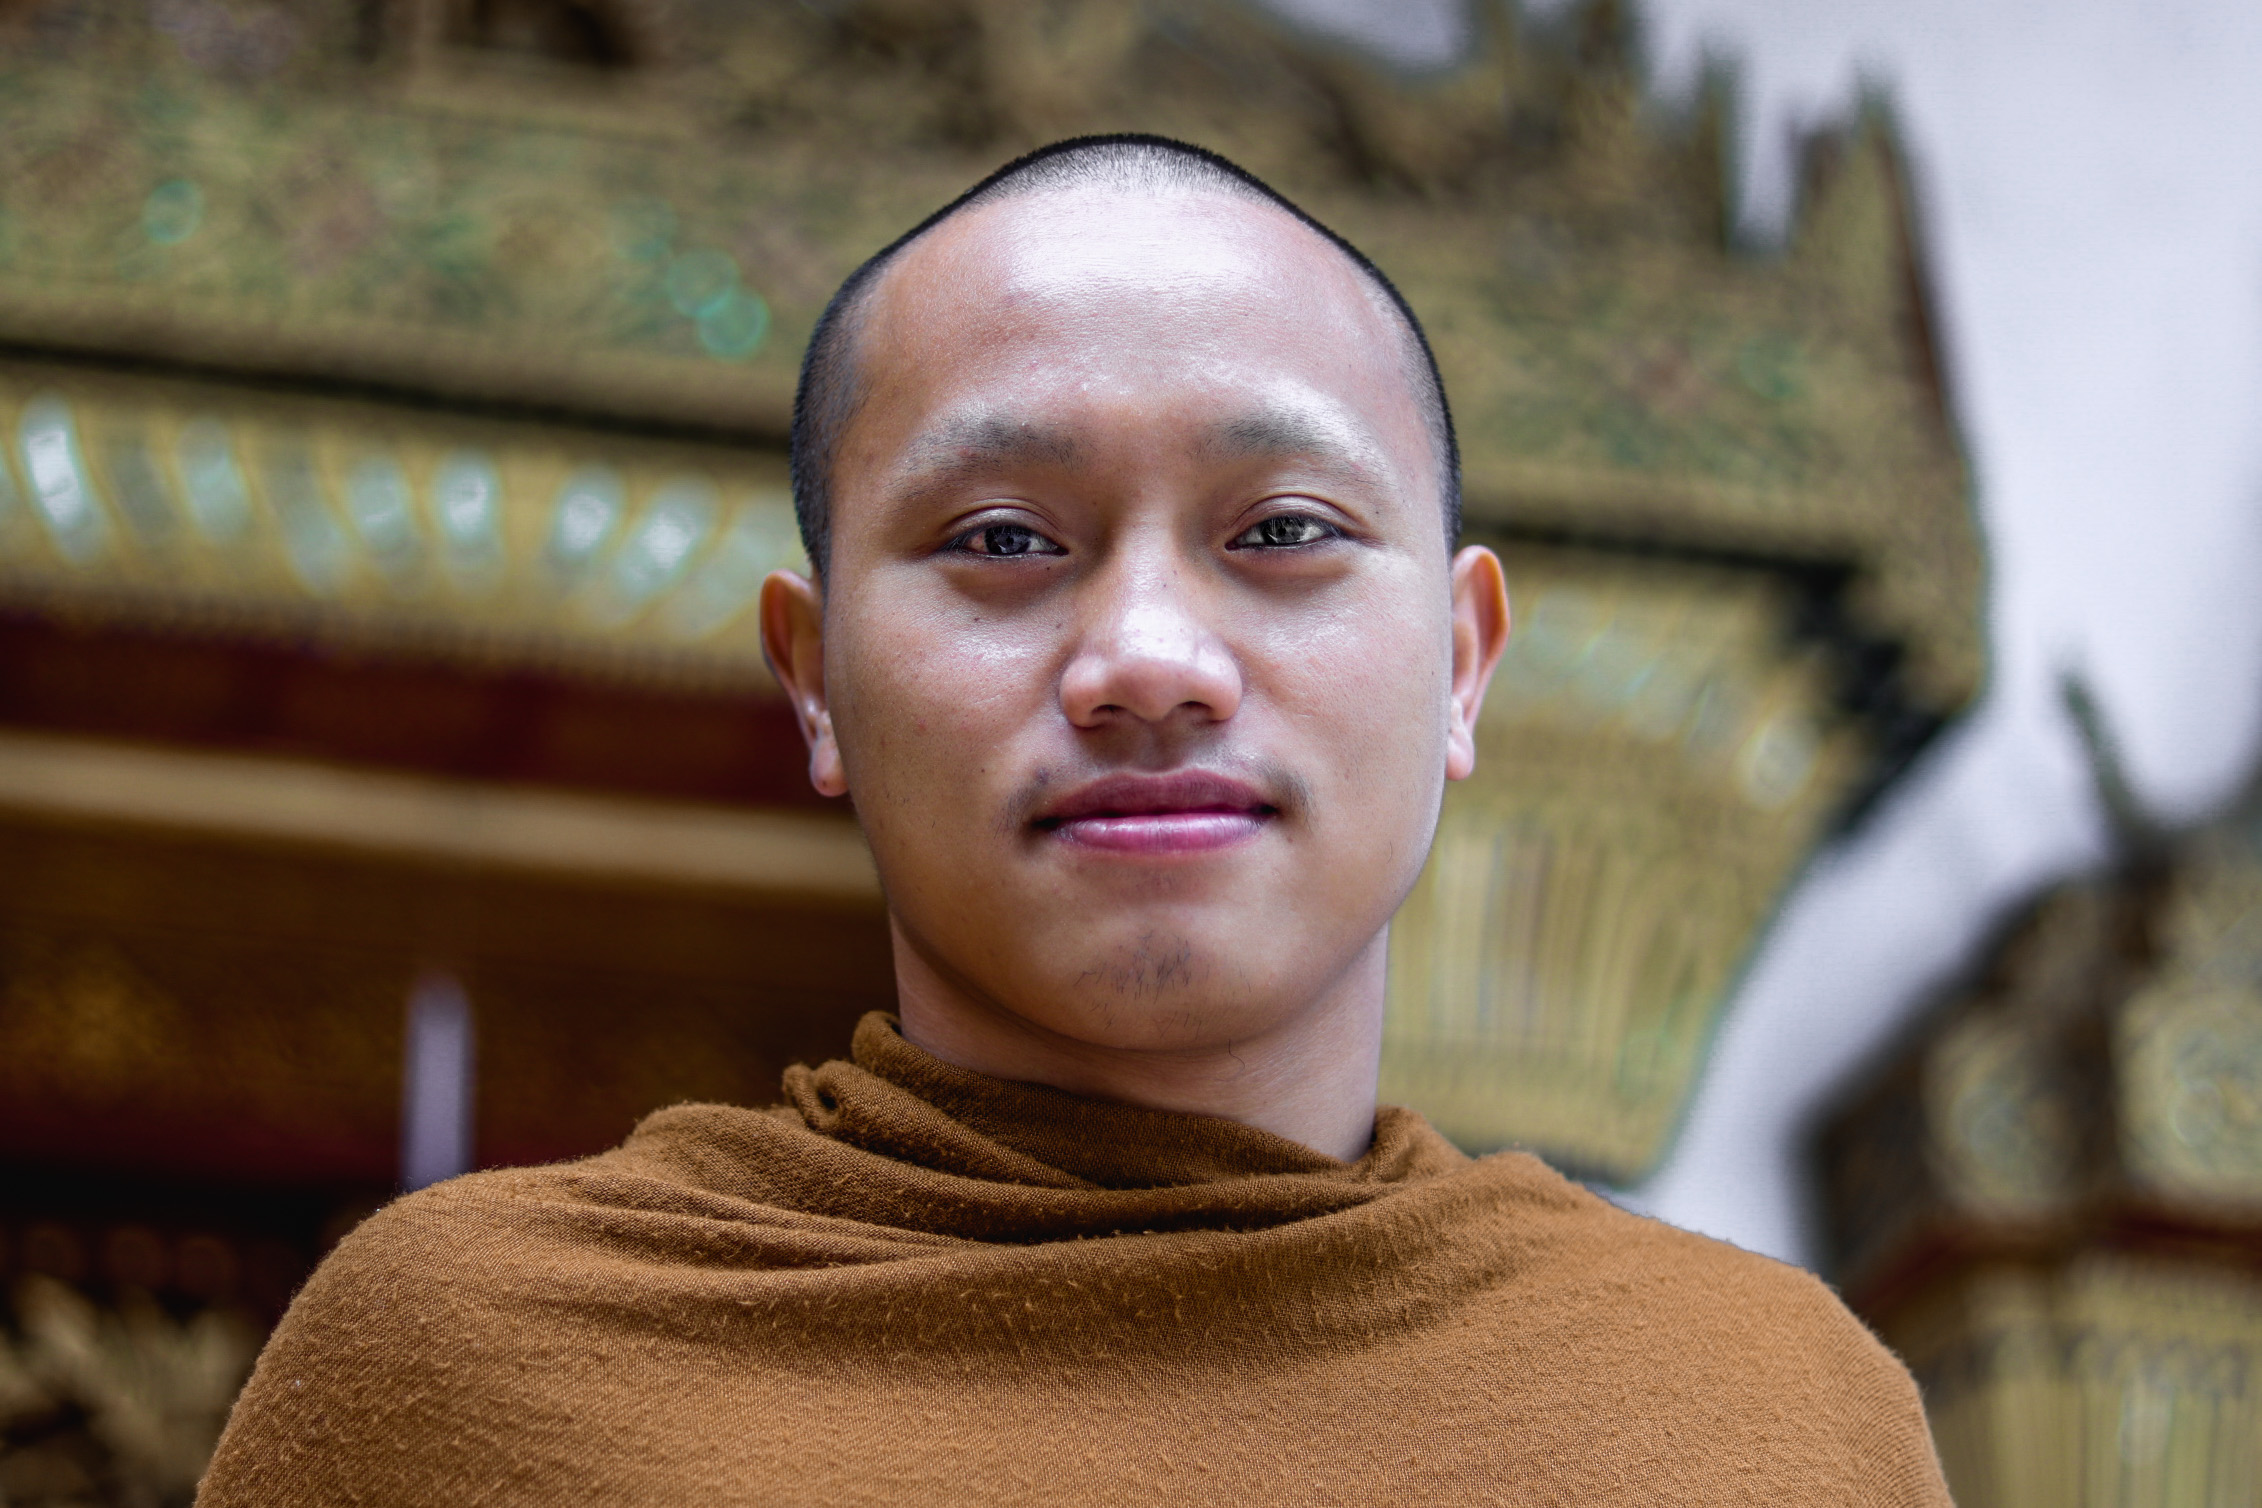 Monk Somkiet Siyargionsar Obee, 22